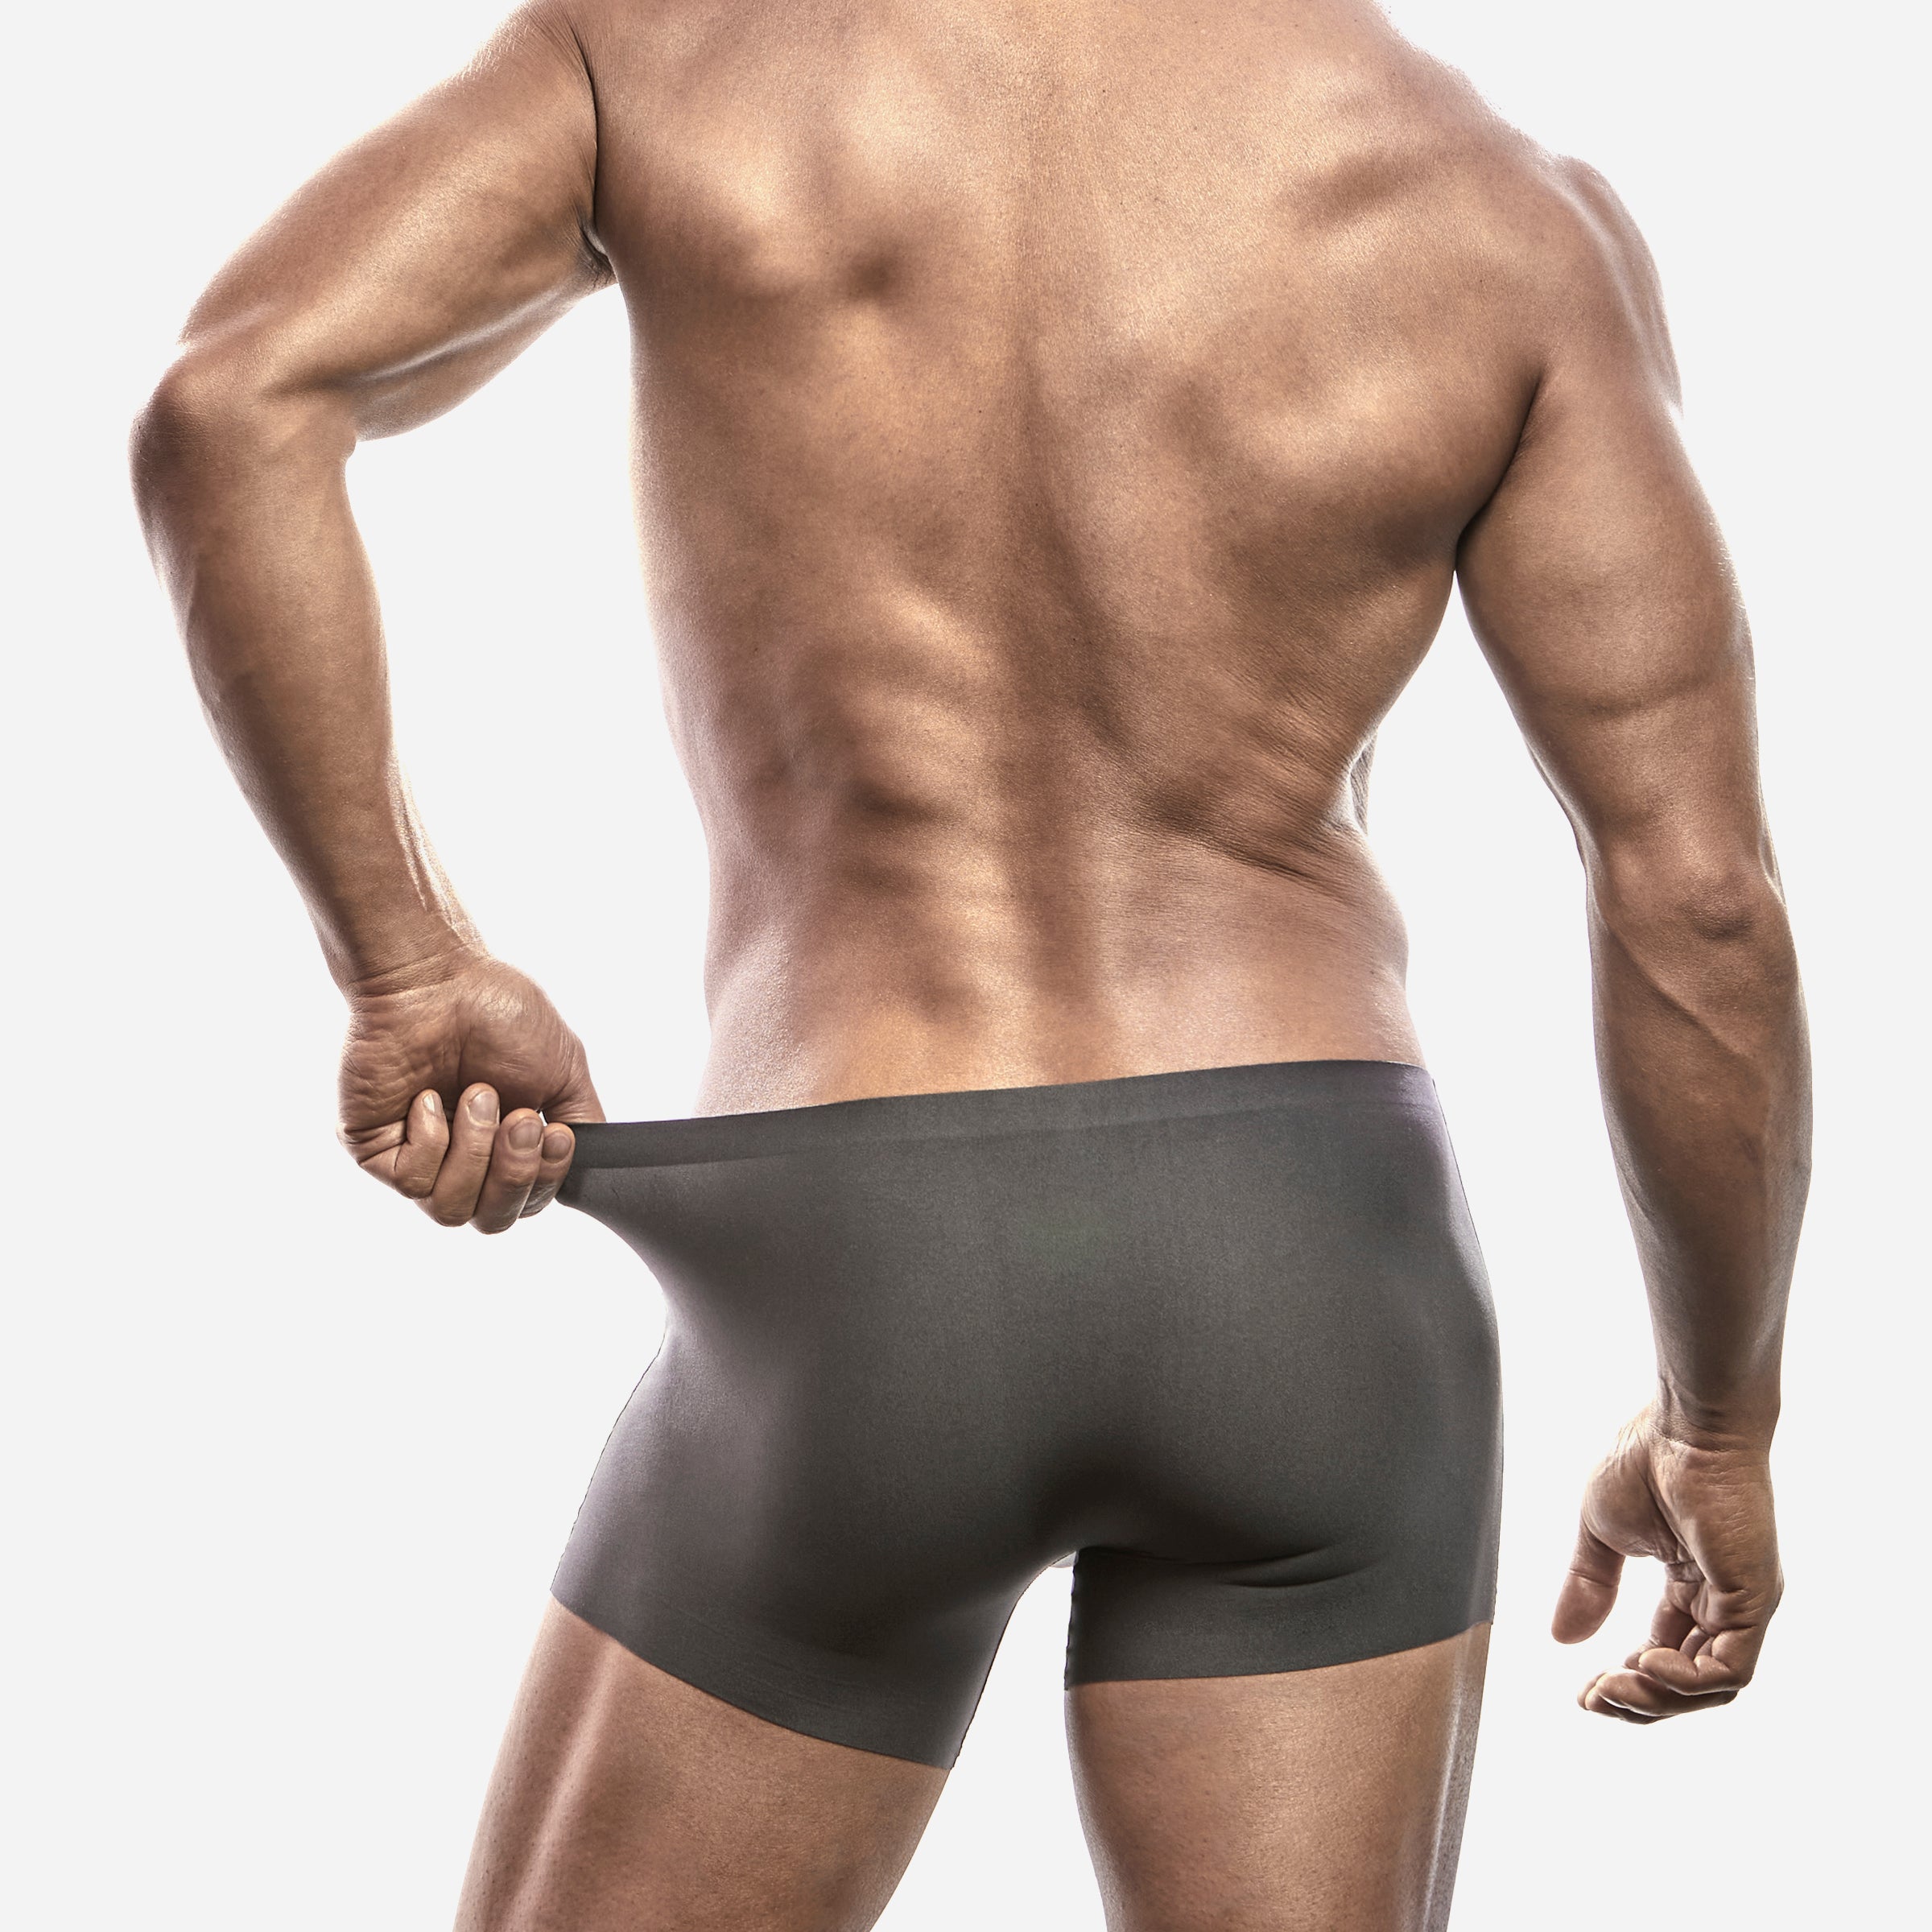 AsWeMove vs. Mack Weldon: Which Performance Underwear Is Better?